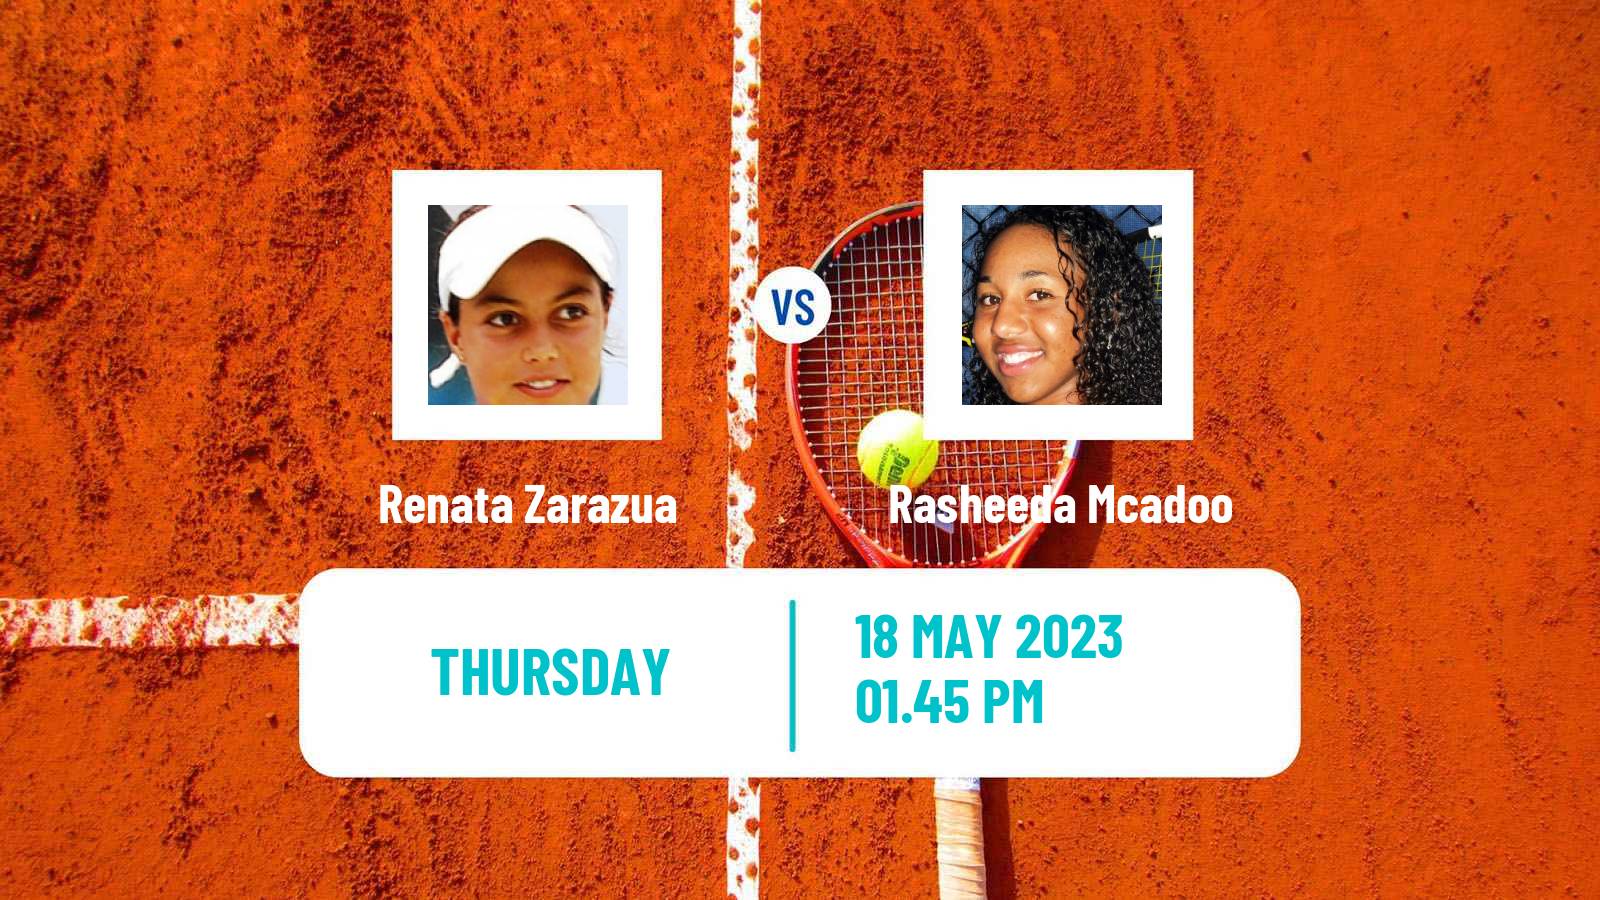 Tennis ITF W60 Pelham Al Women Renata Zarazua - Rasheeda Mcadoo